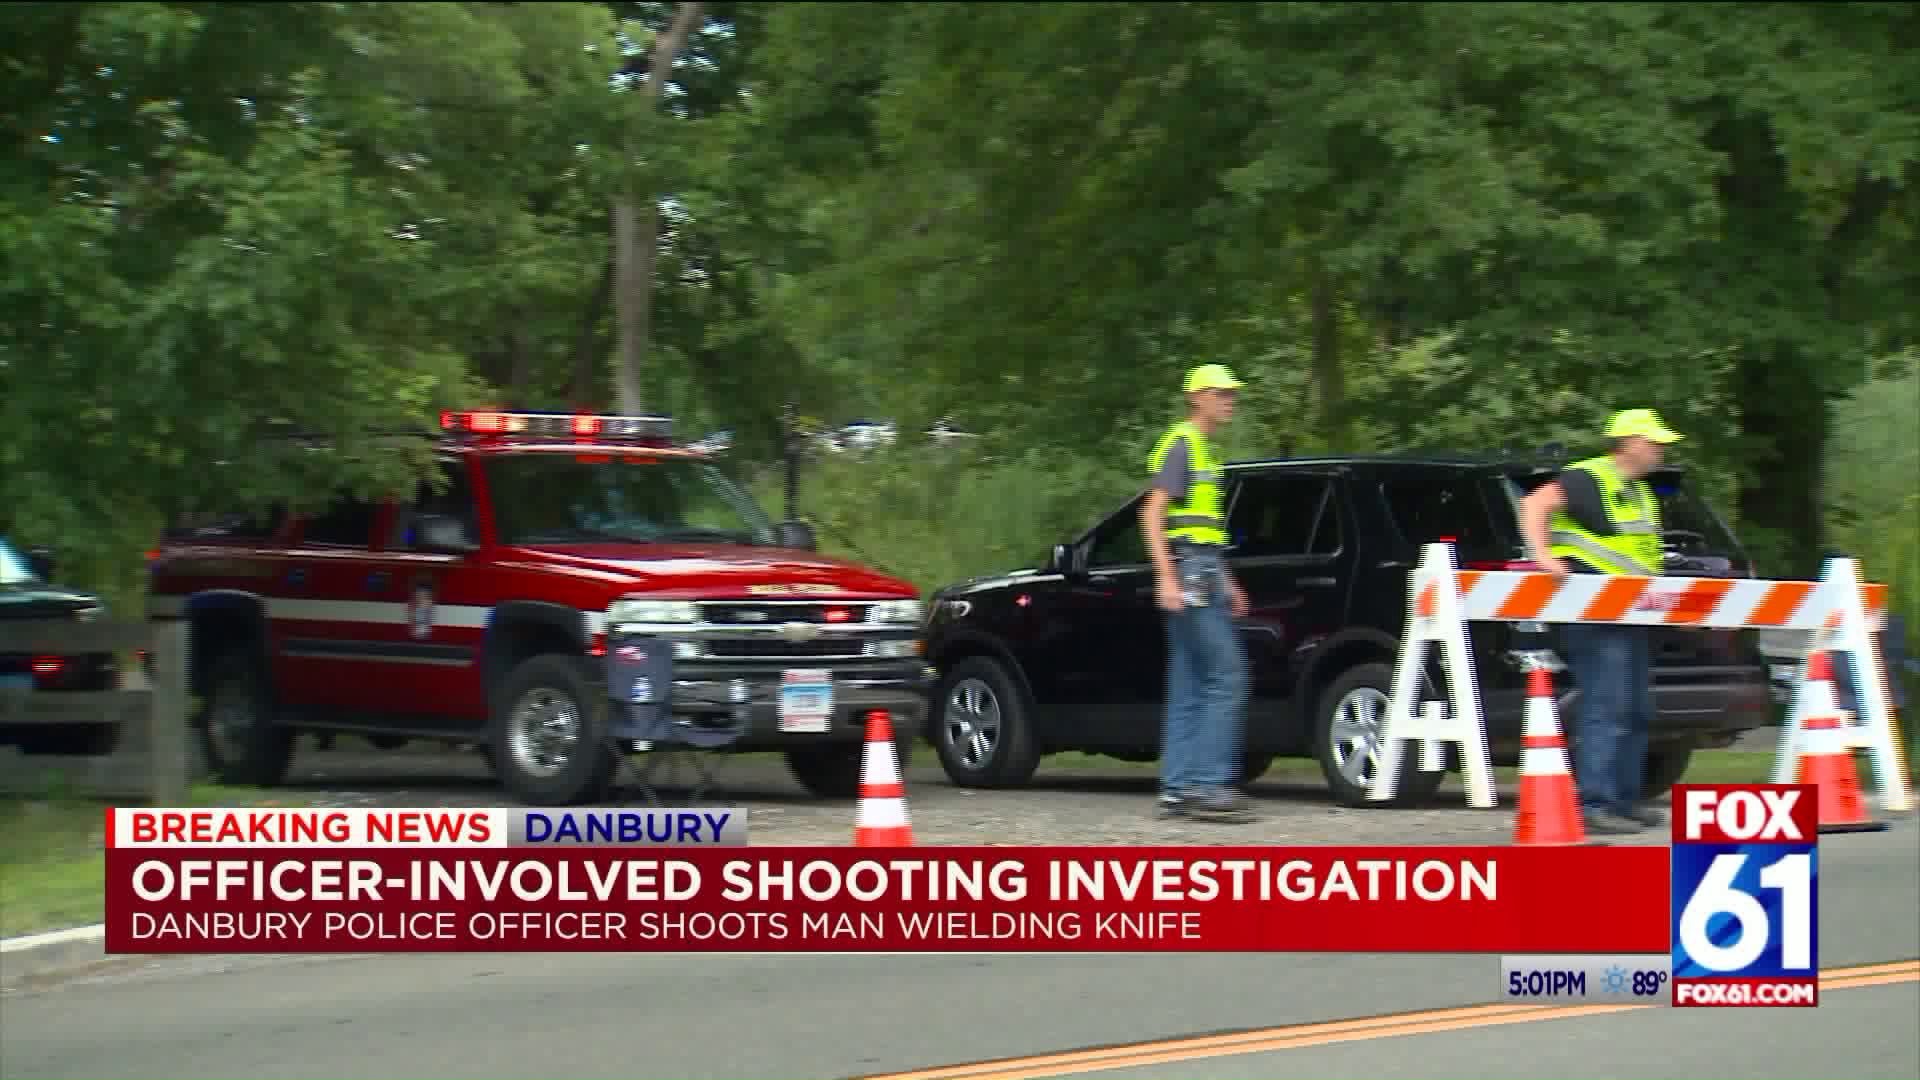 Officer involved shooting investigation